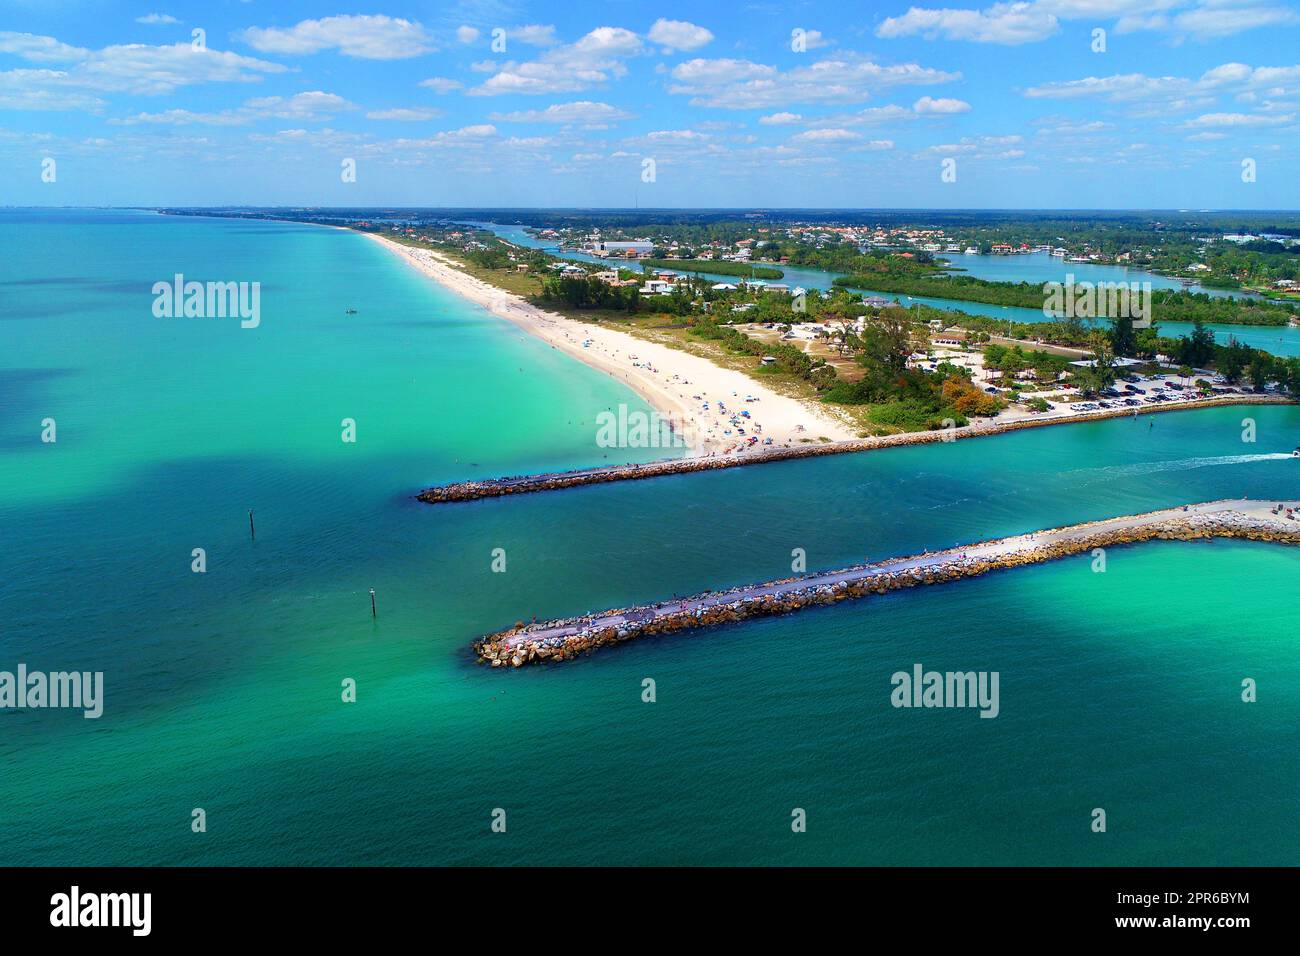 The Jetty at Venice Florida along Florida Gulf Coast a famouss tuorist destination Stock Photo